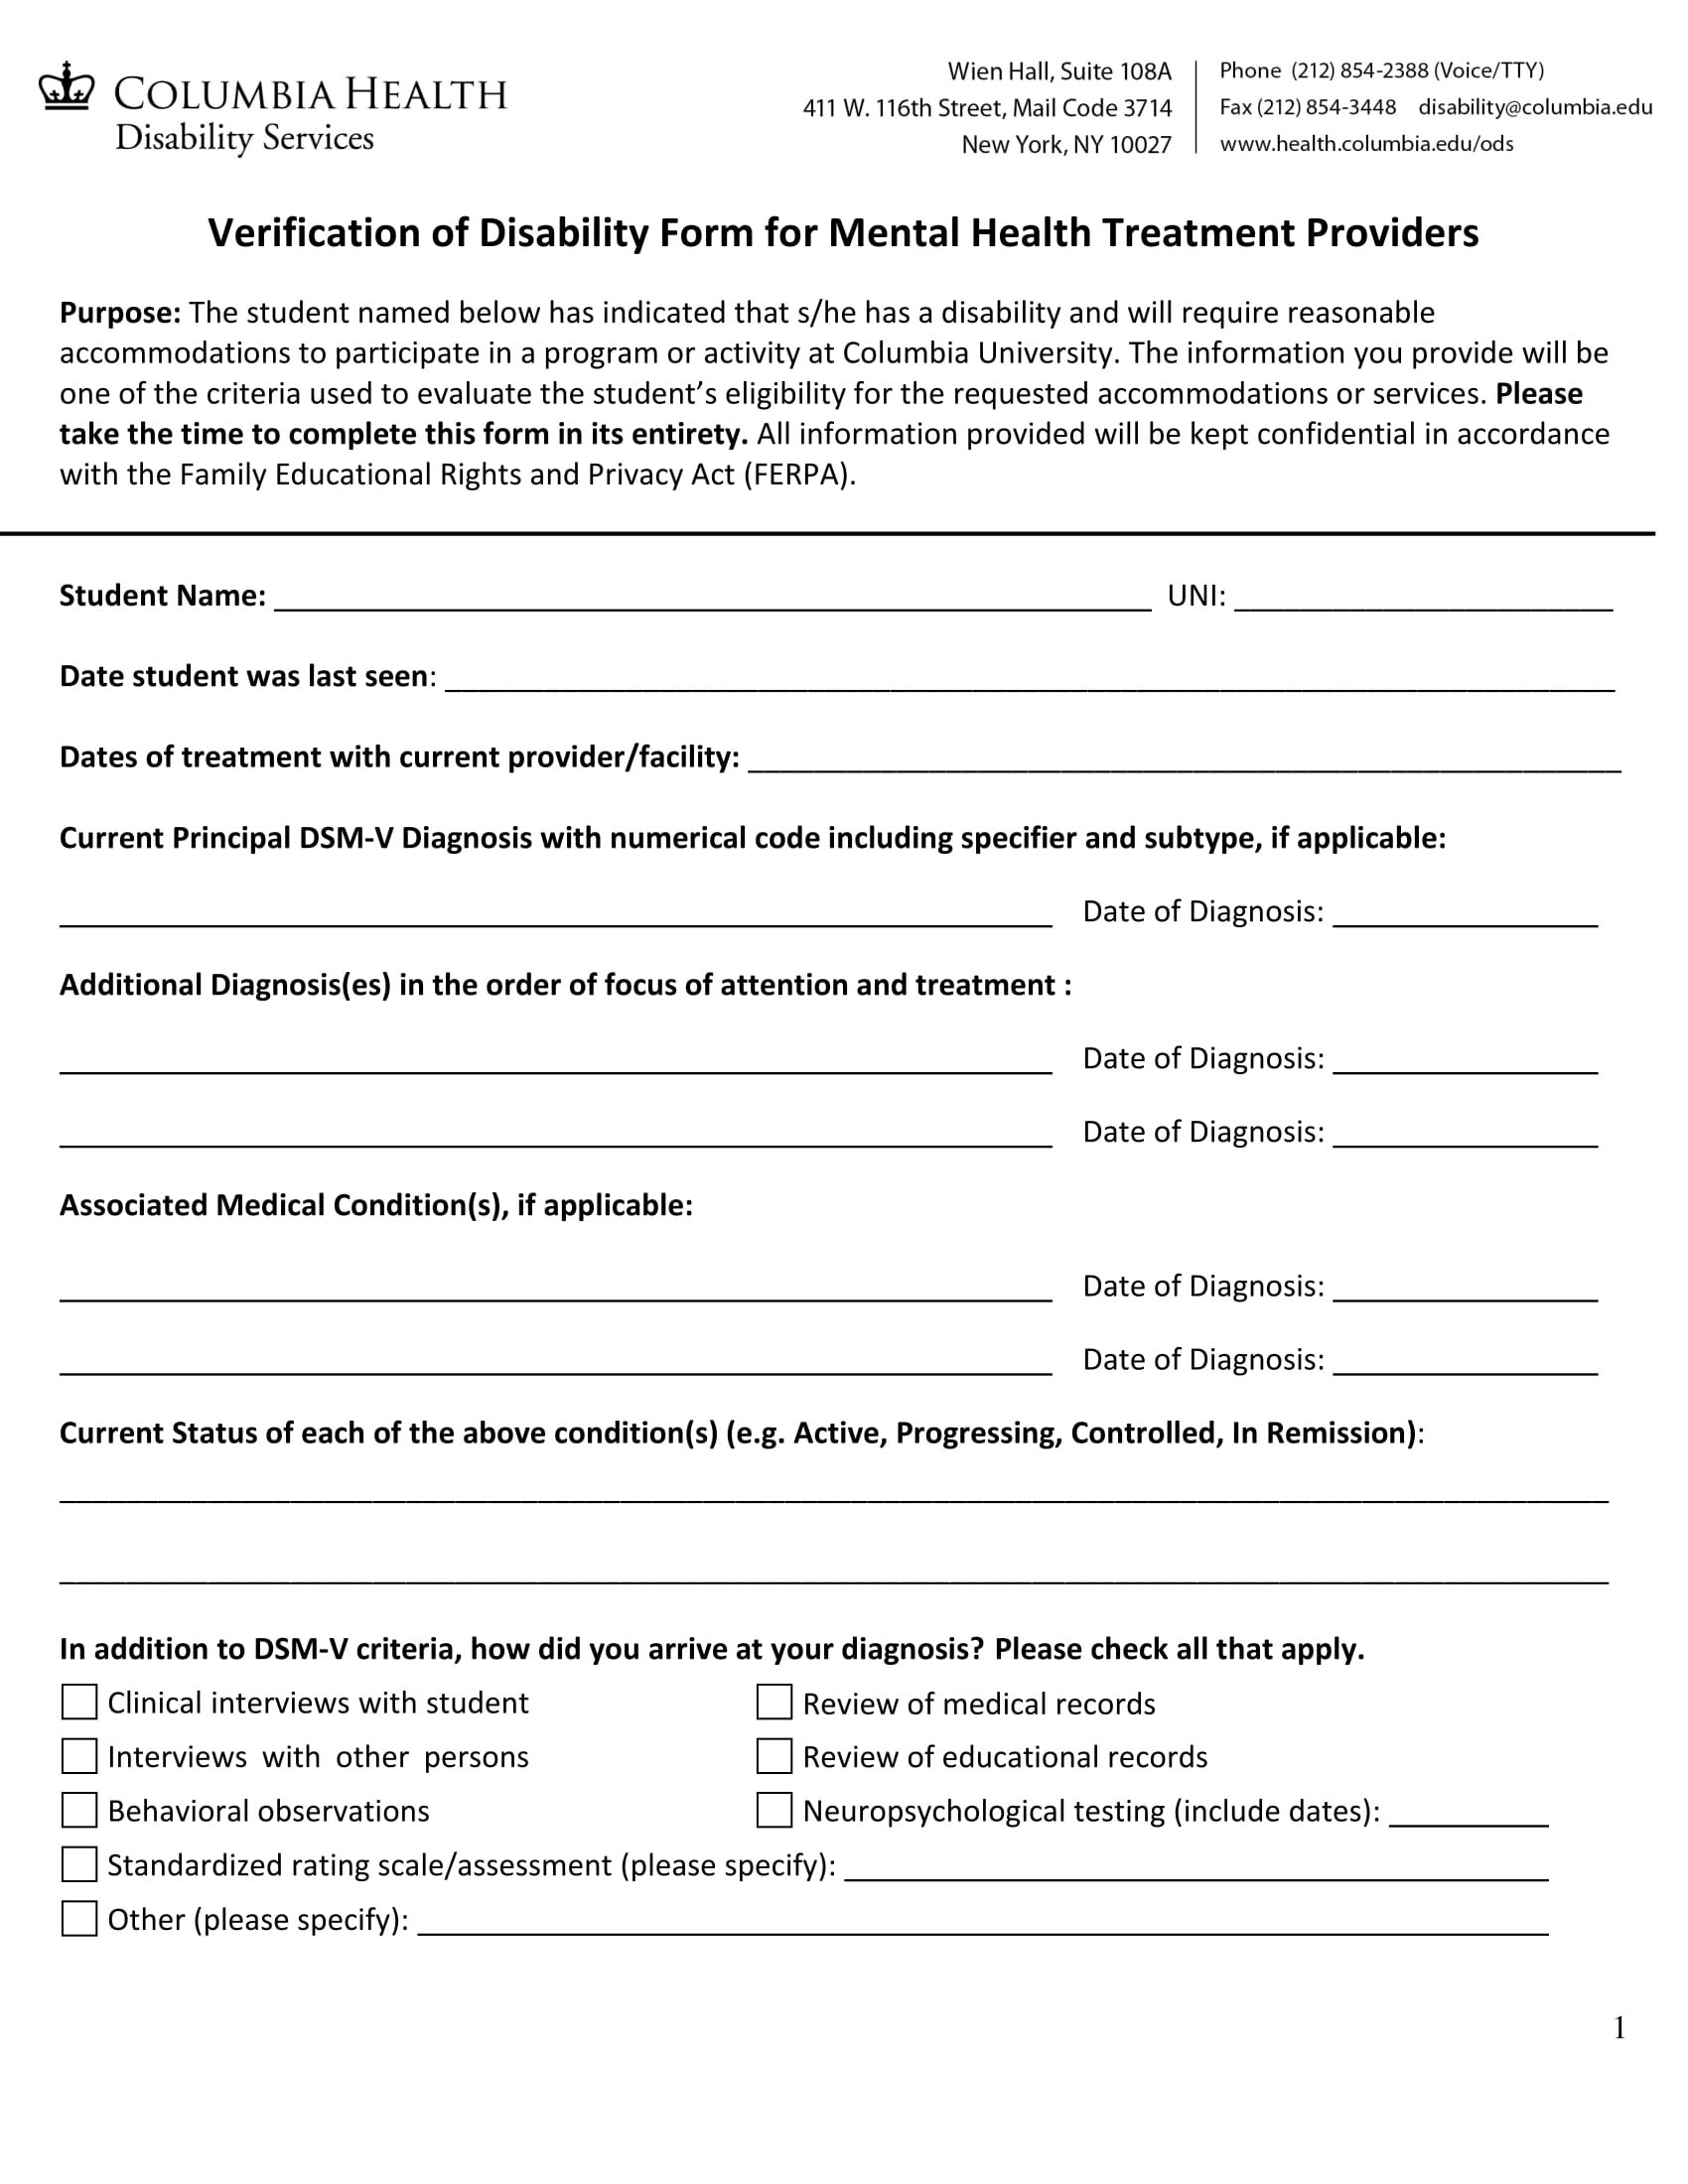 mental health providers disability verification form 1